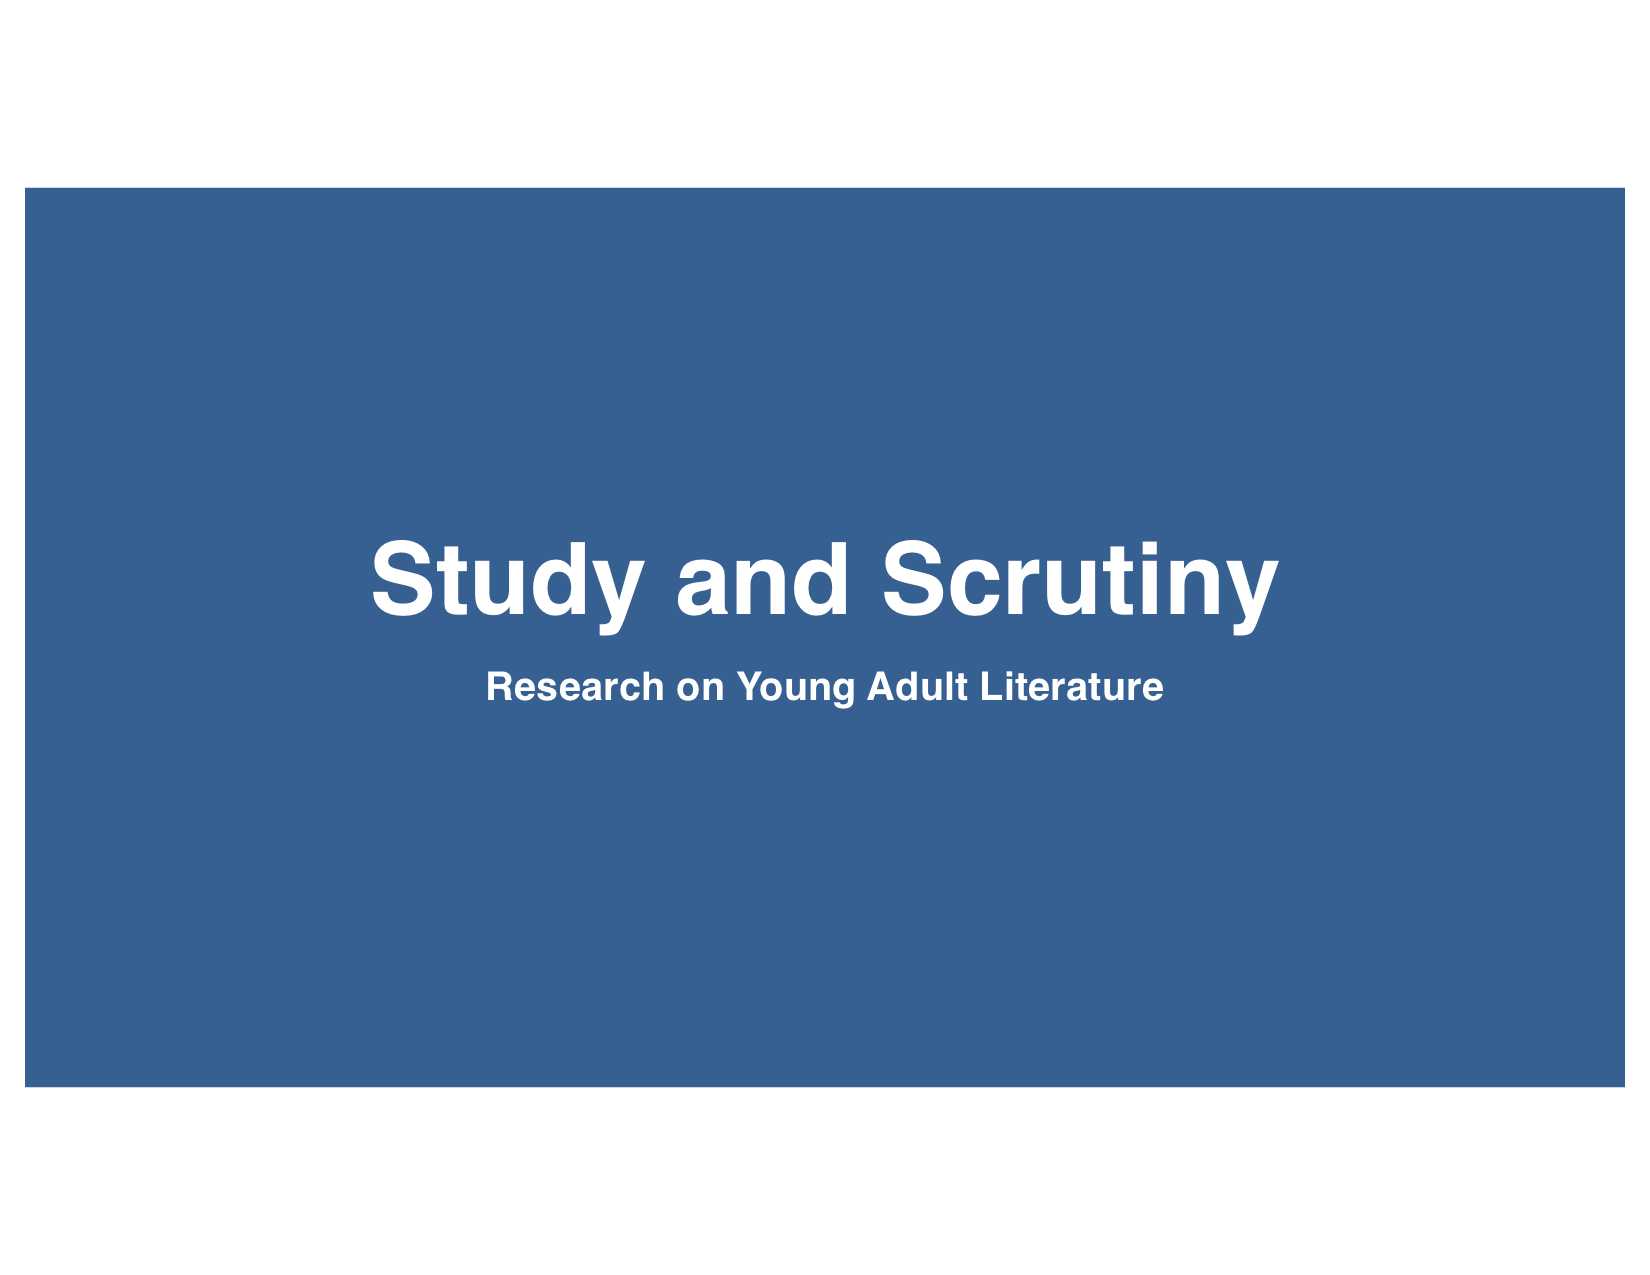 Study and Scrutiny logo on blue background